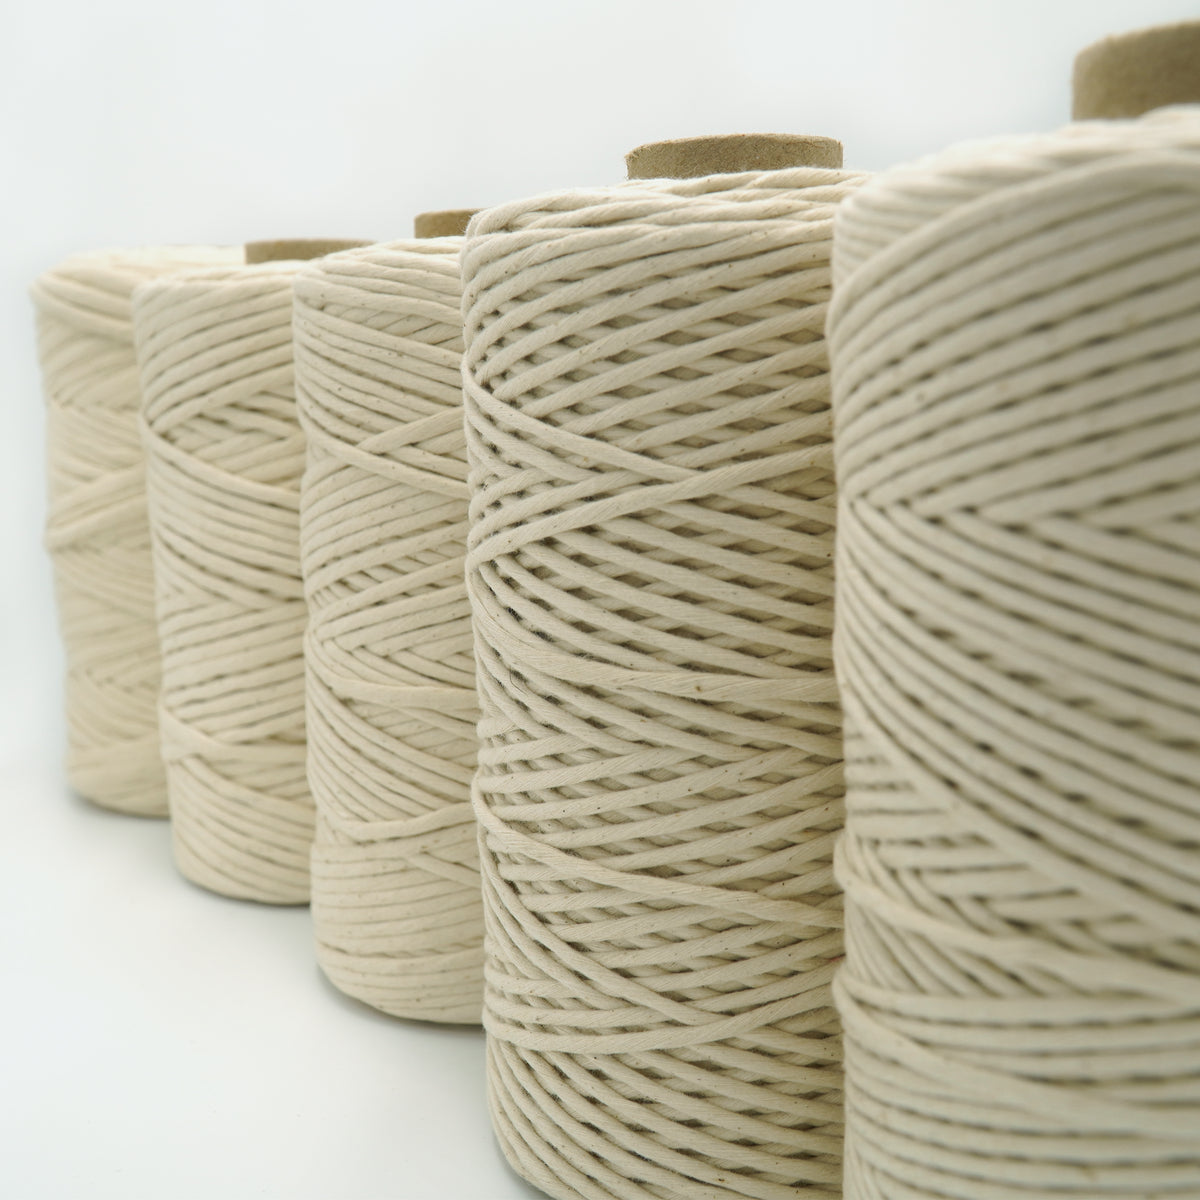 8mm Braided cord made in Spain | Macrame | 100% cotton original organic rope